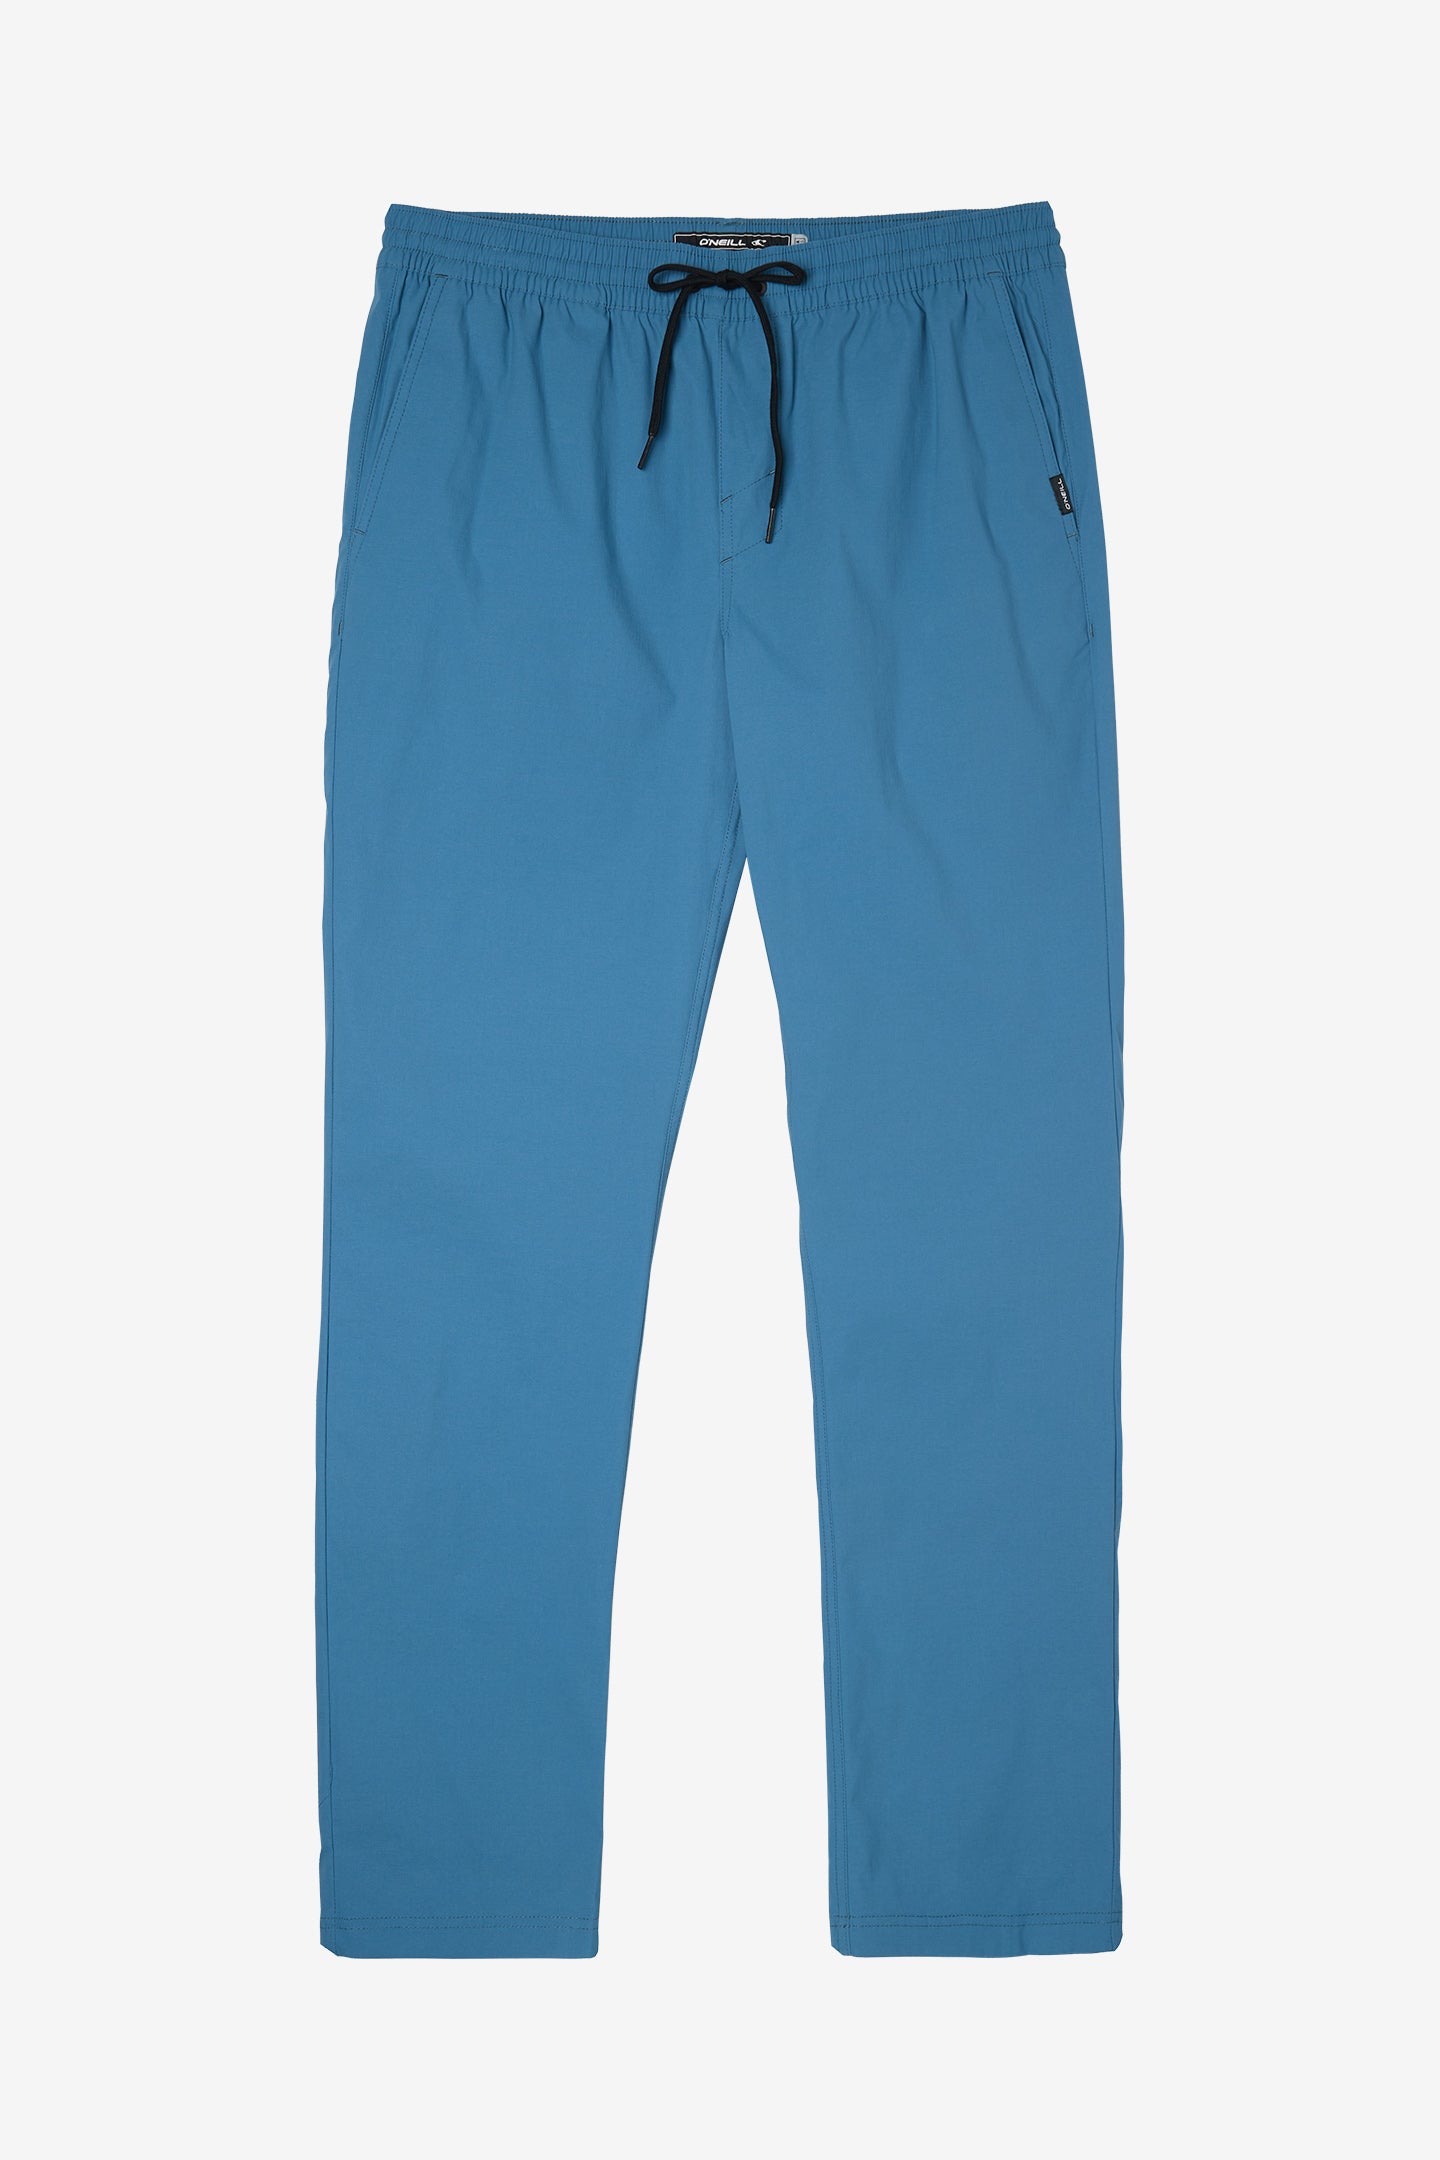 Trvlr Coast Hybrid Pants - Storm Blue | O'Neill